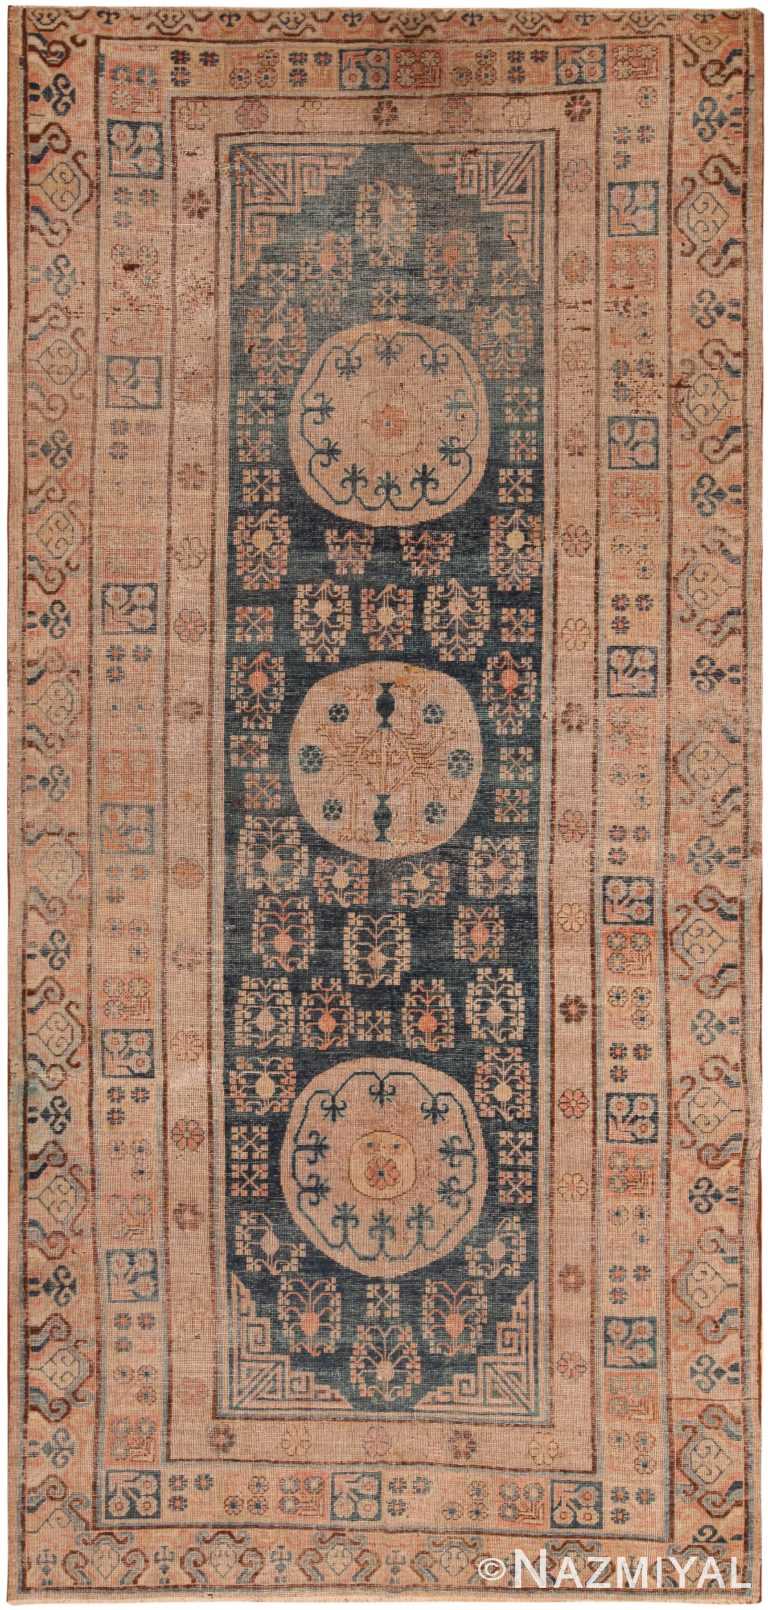 Antique Khotan East Turkestan Rug 71484 by Nazmiyal Antique Rugs